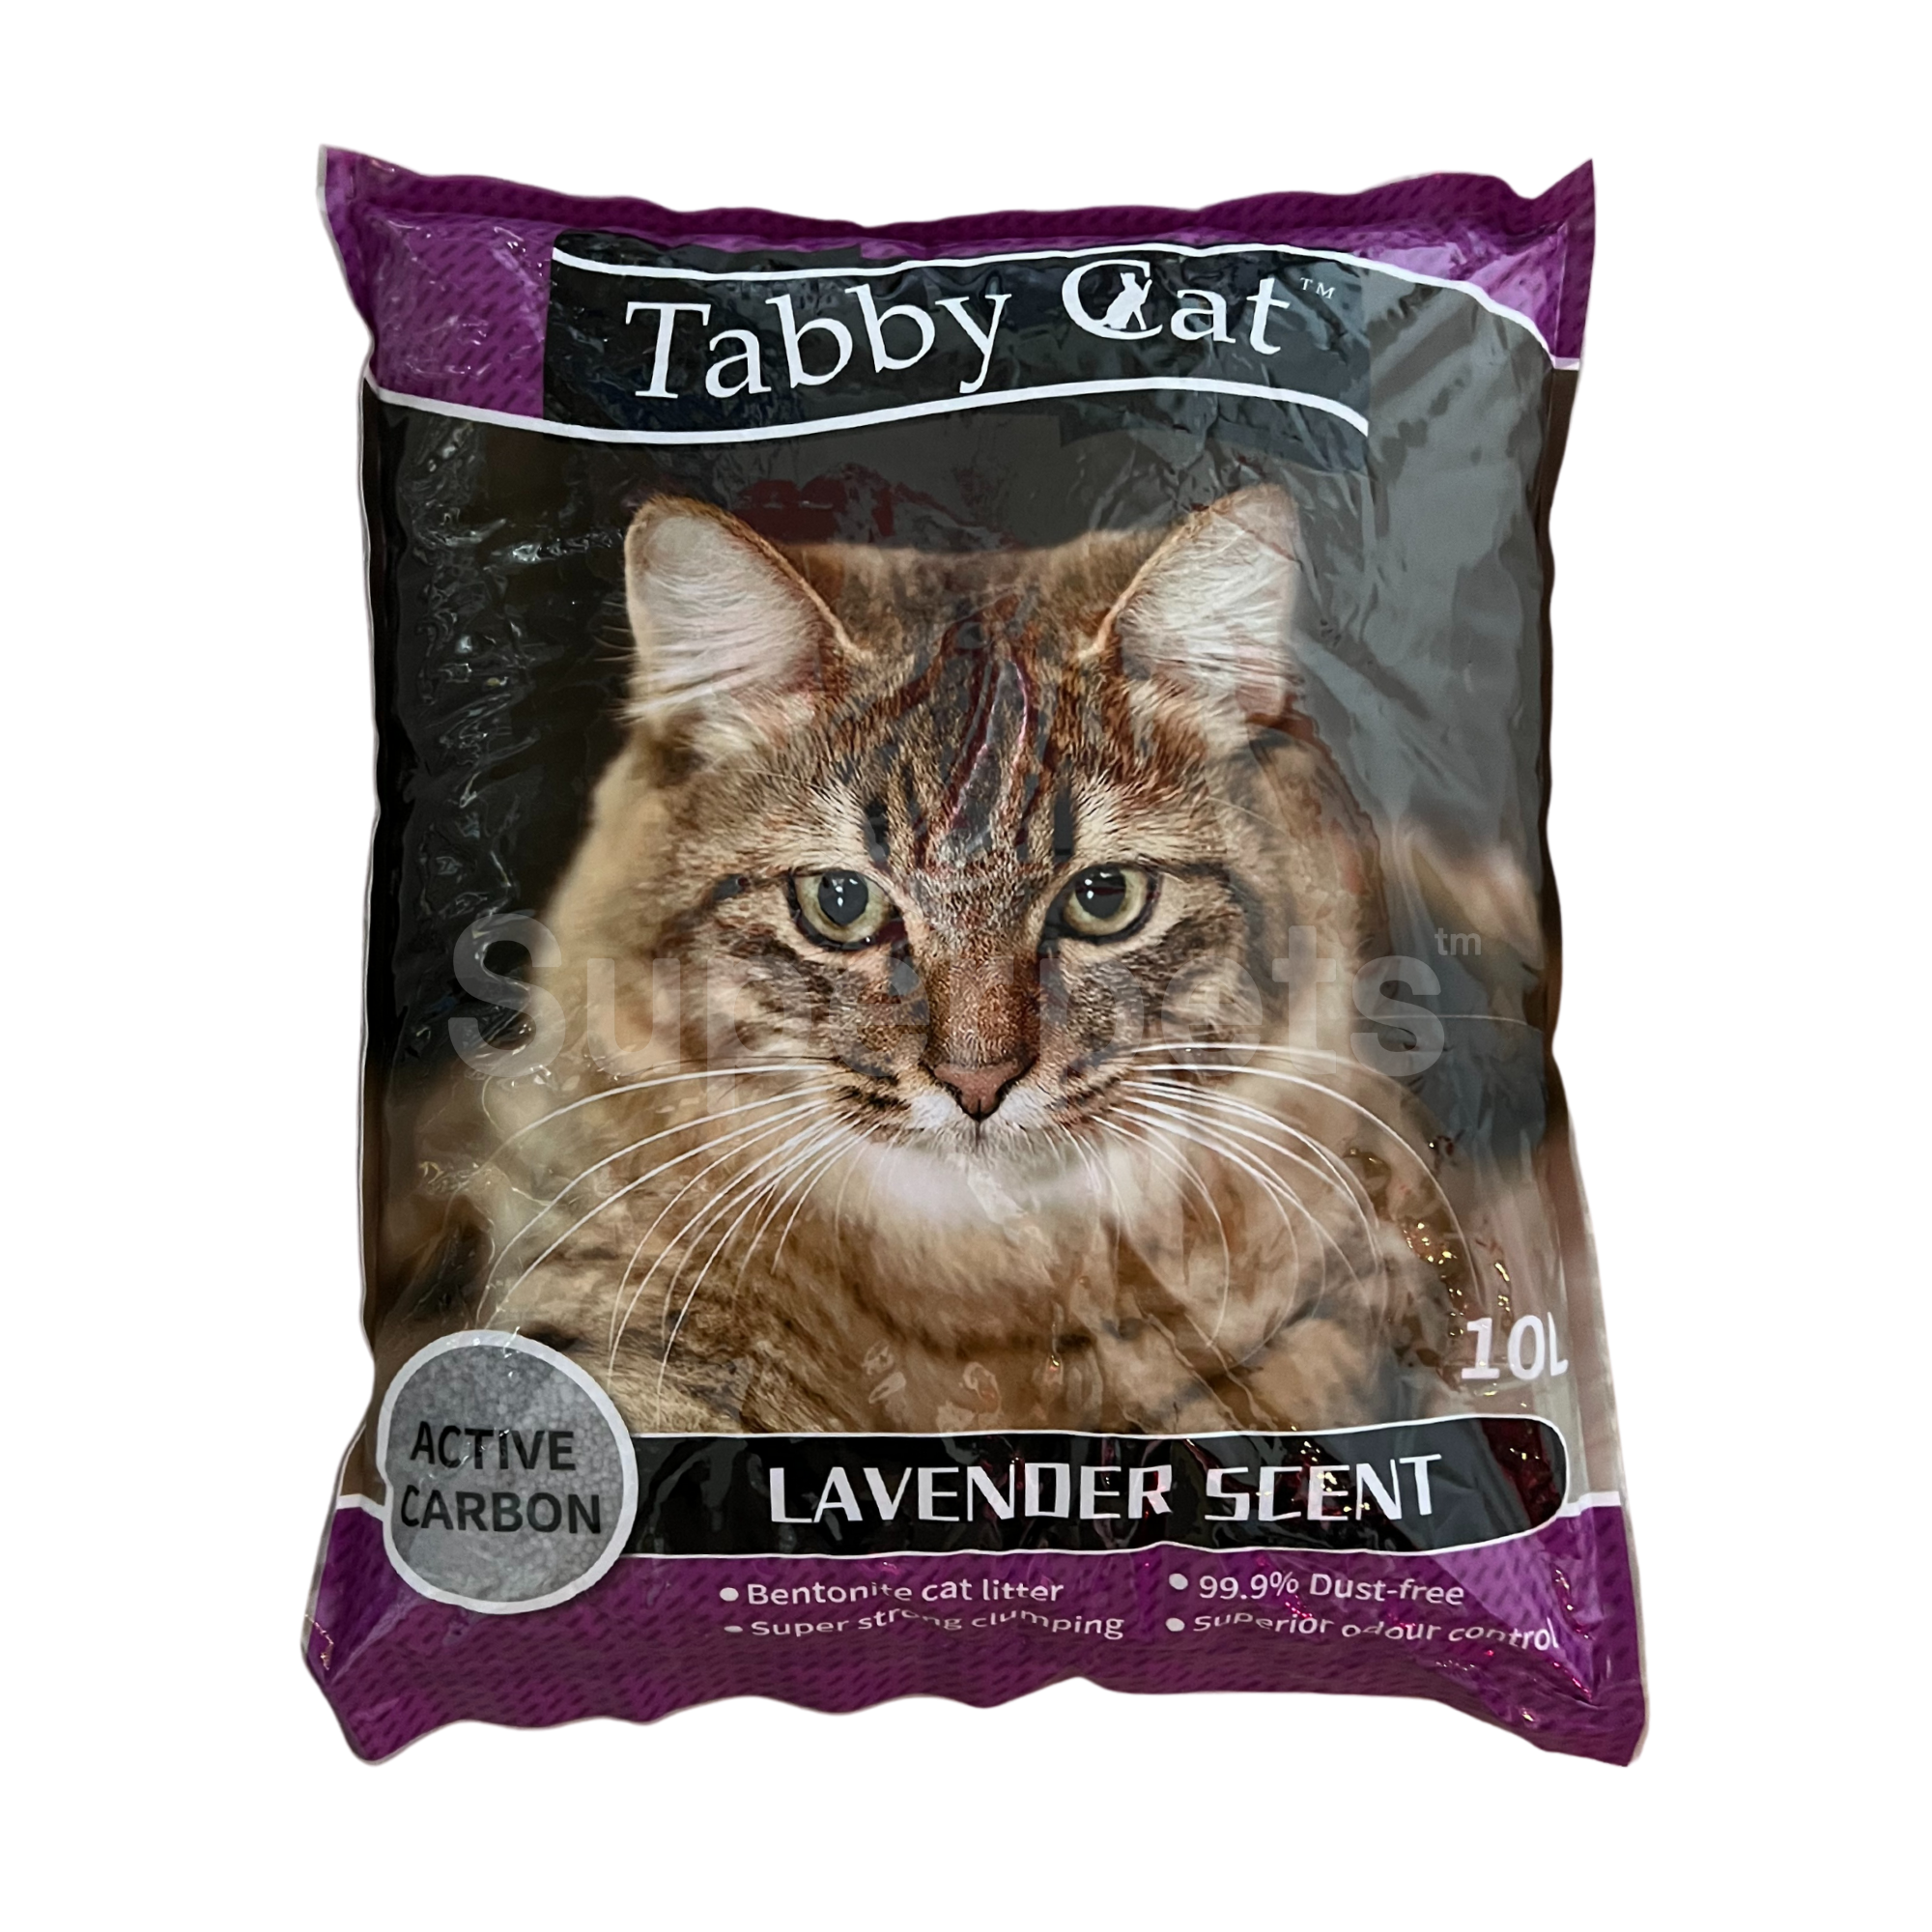 Tabby Cat - Clumping Cat Litter 10L - Lavender